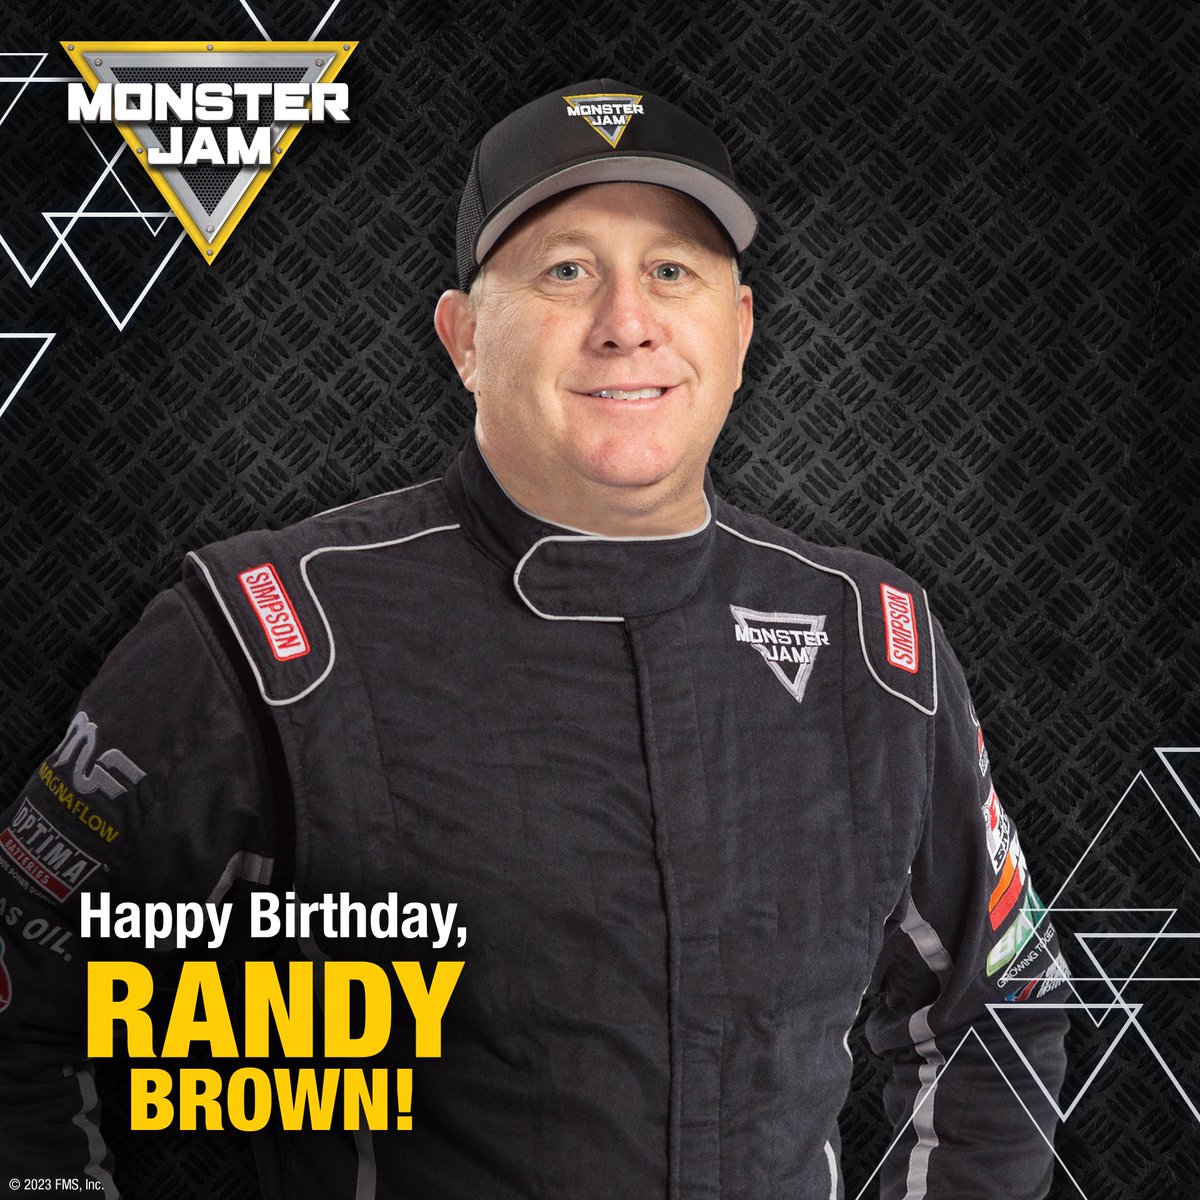 Join us in wishing Randy Brown a very Happy Birthday! 🎉

#MonsterJam